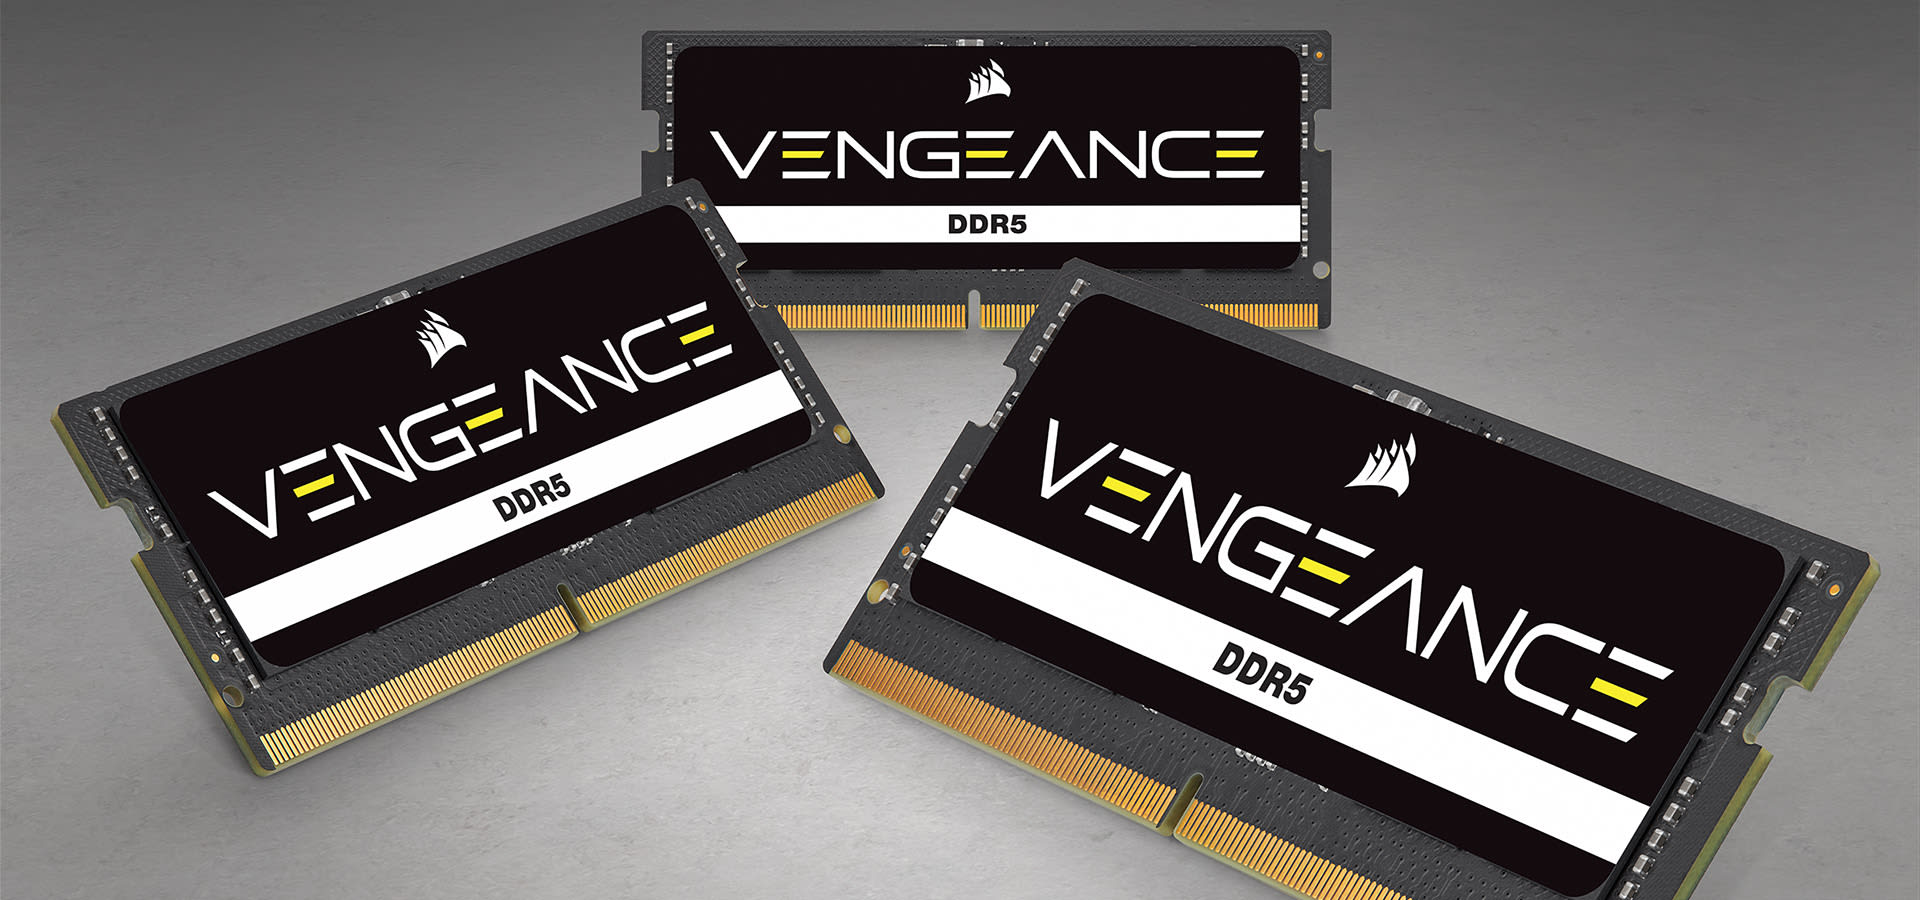  Buy Corsair Vengeance DDR5 SODIMM 8GB (1x8GB) DDR5